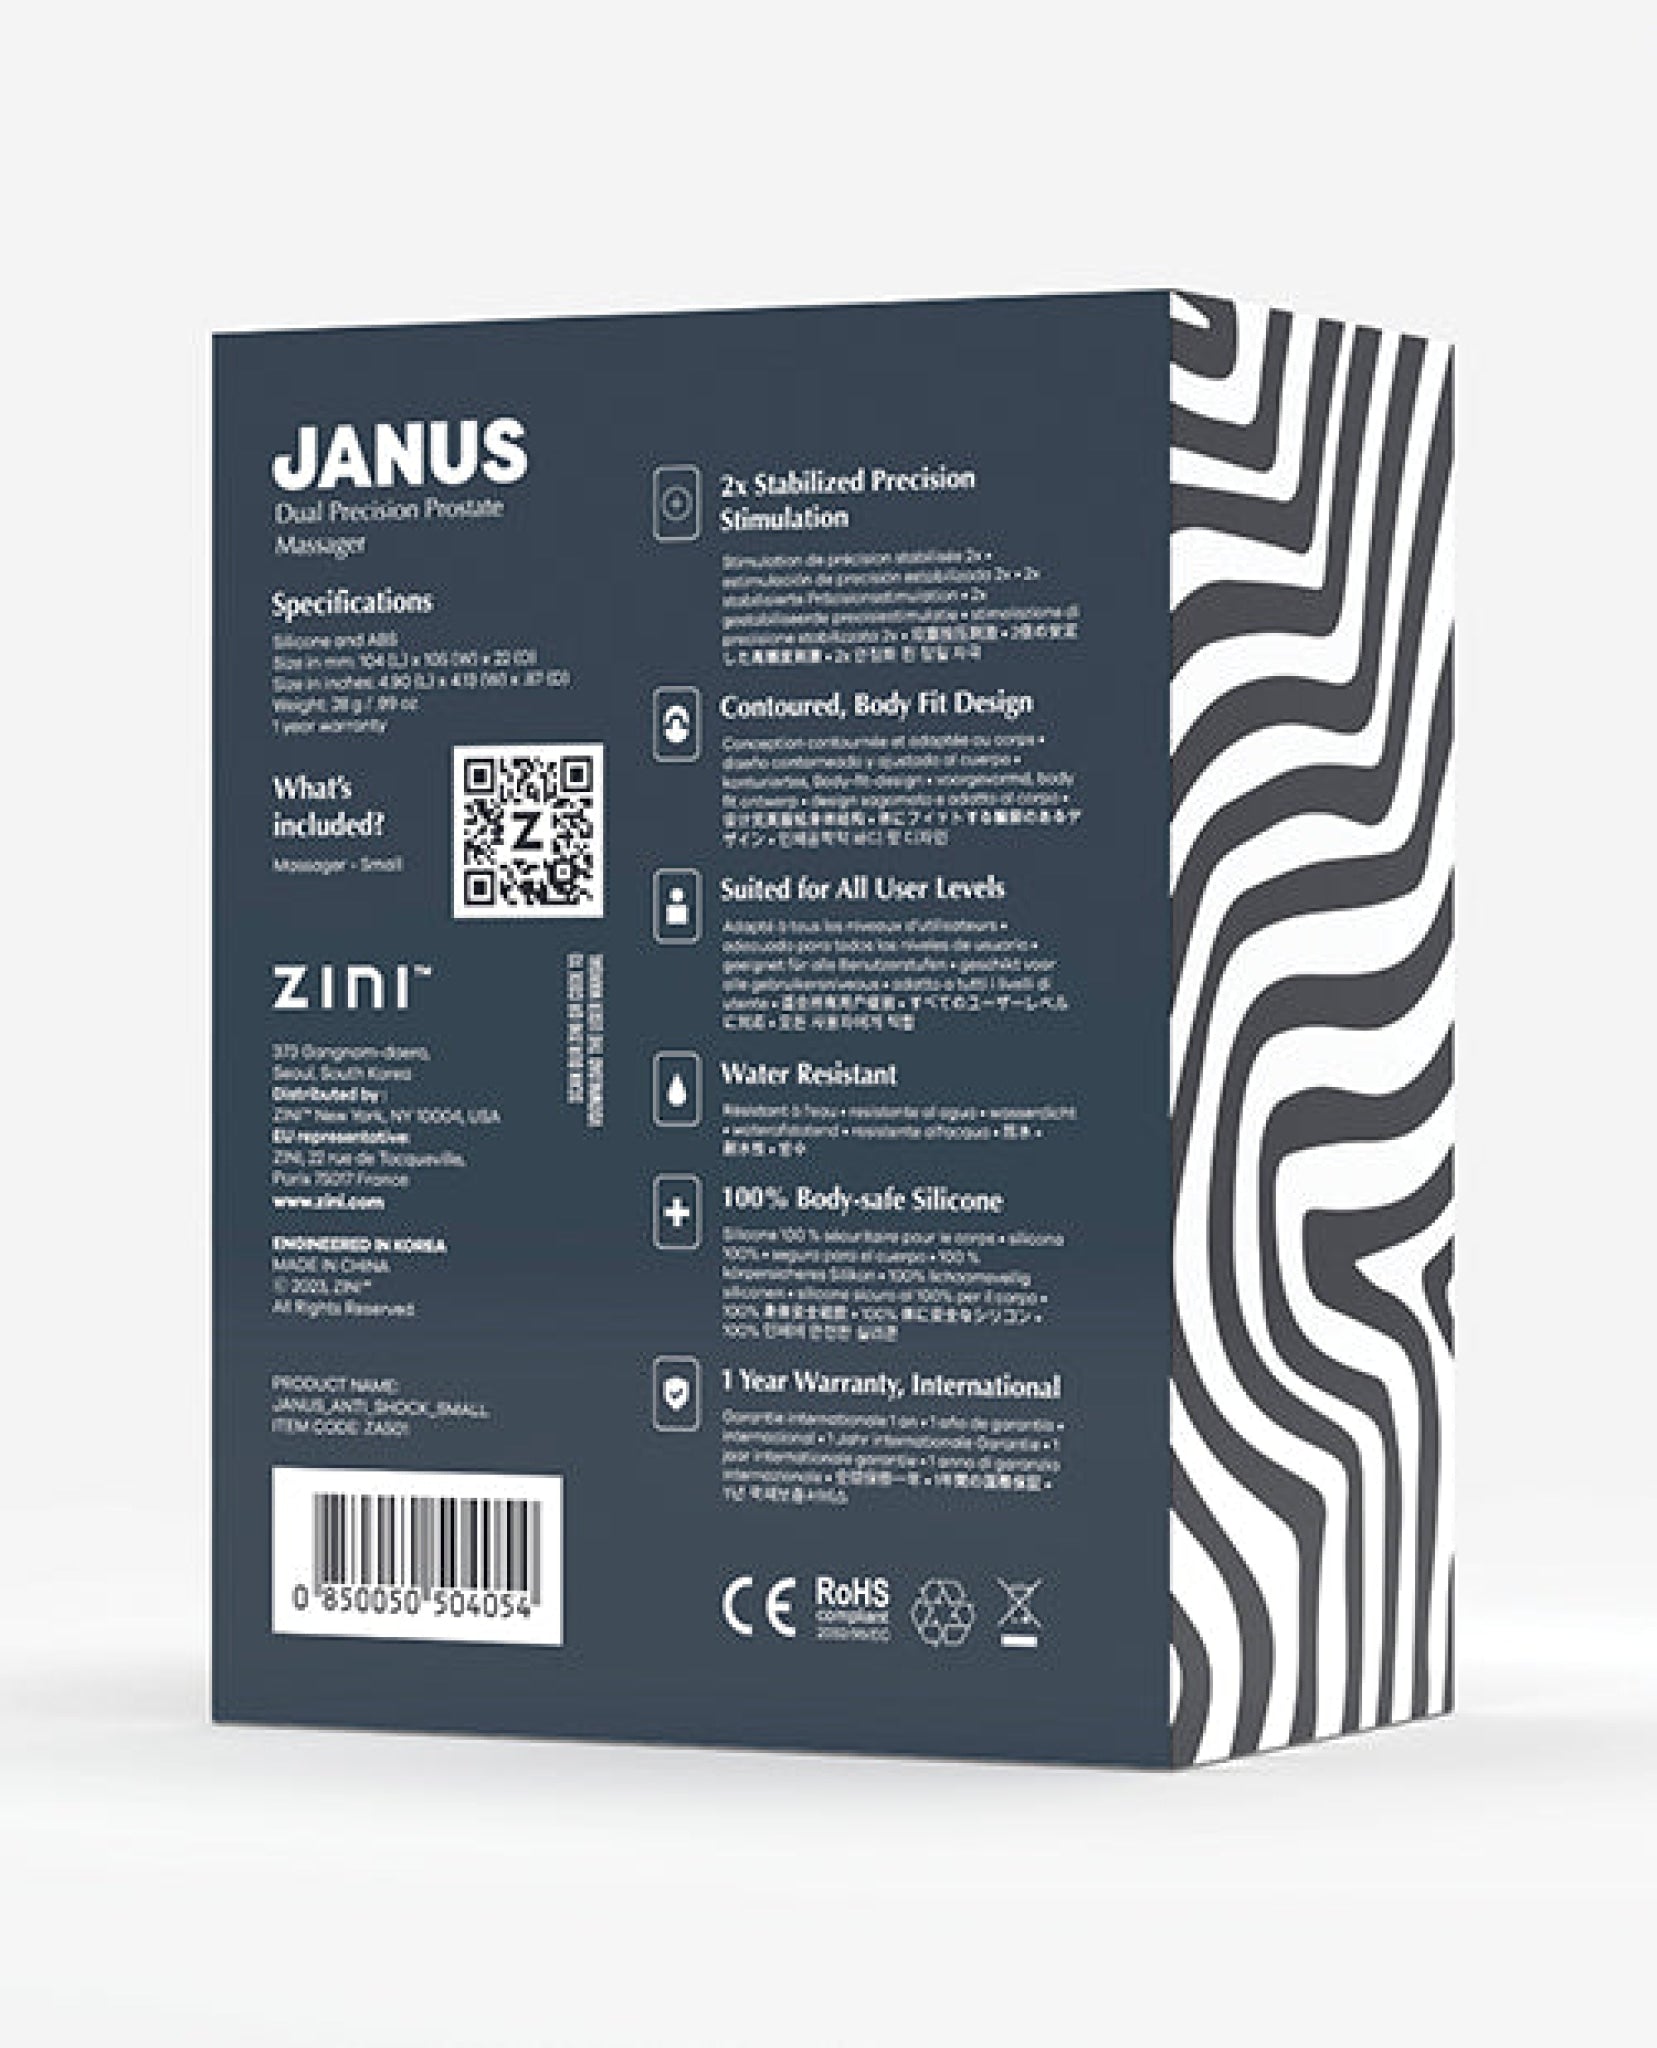 Zini Janus Anti Shock - Black Bswish